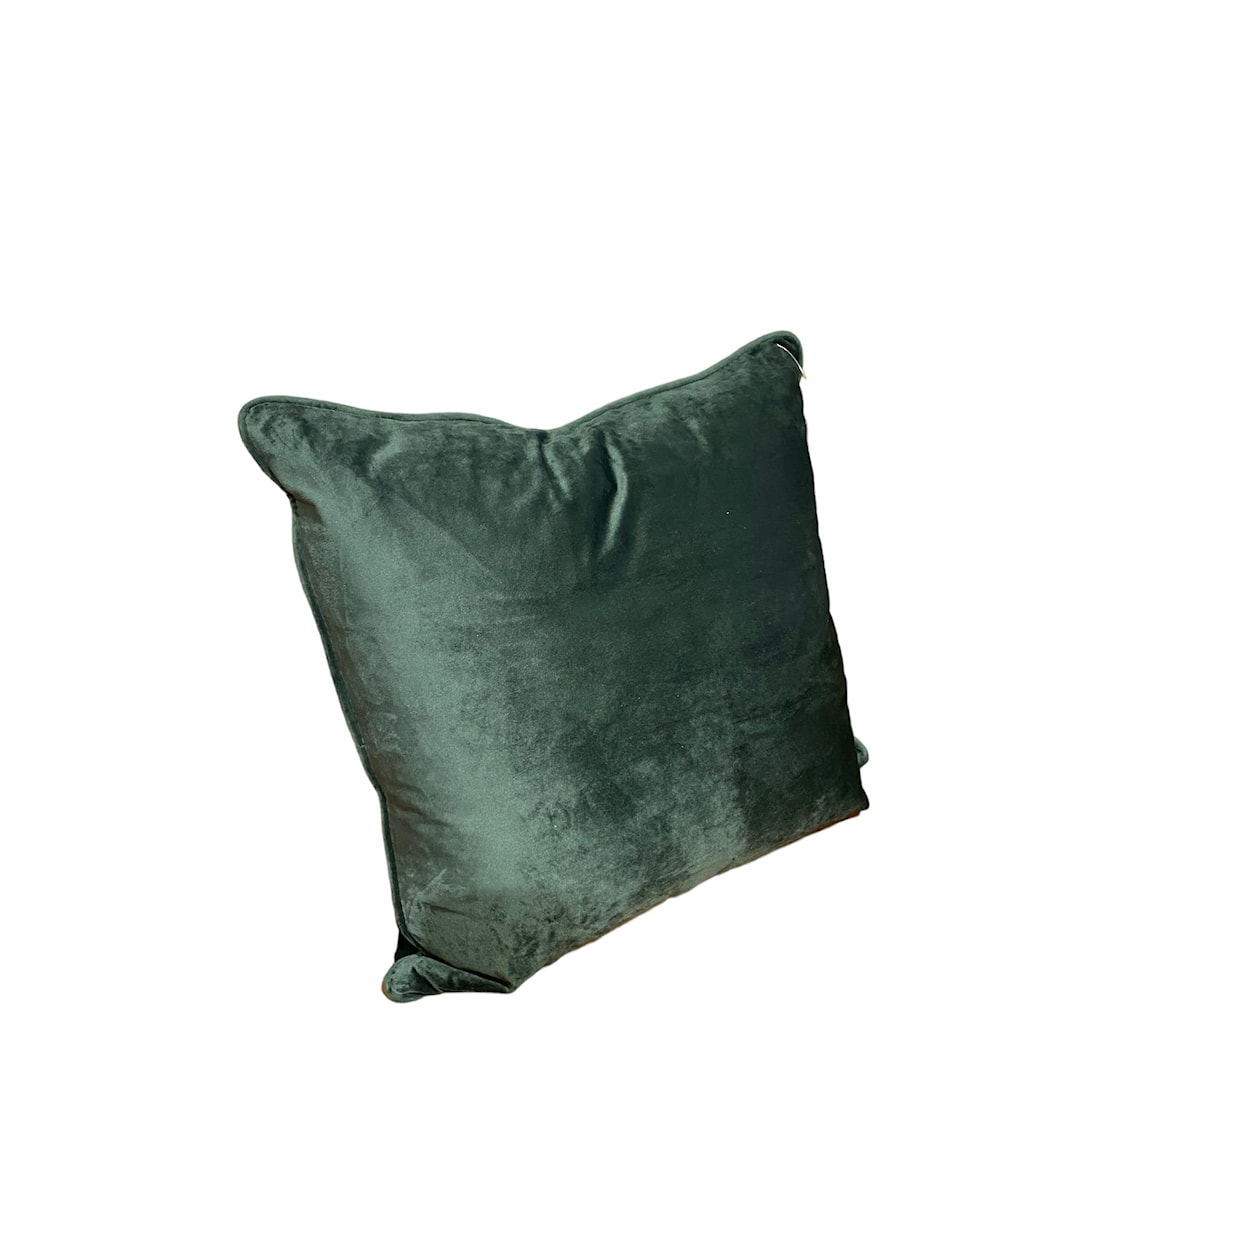 Dovetail Furniture Dovetail Accessories Throw Pillows